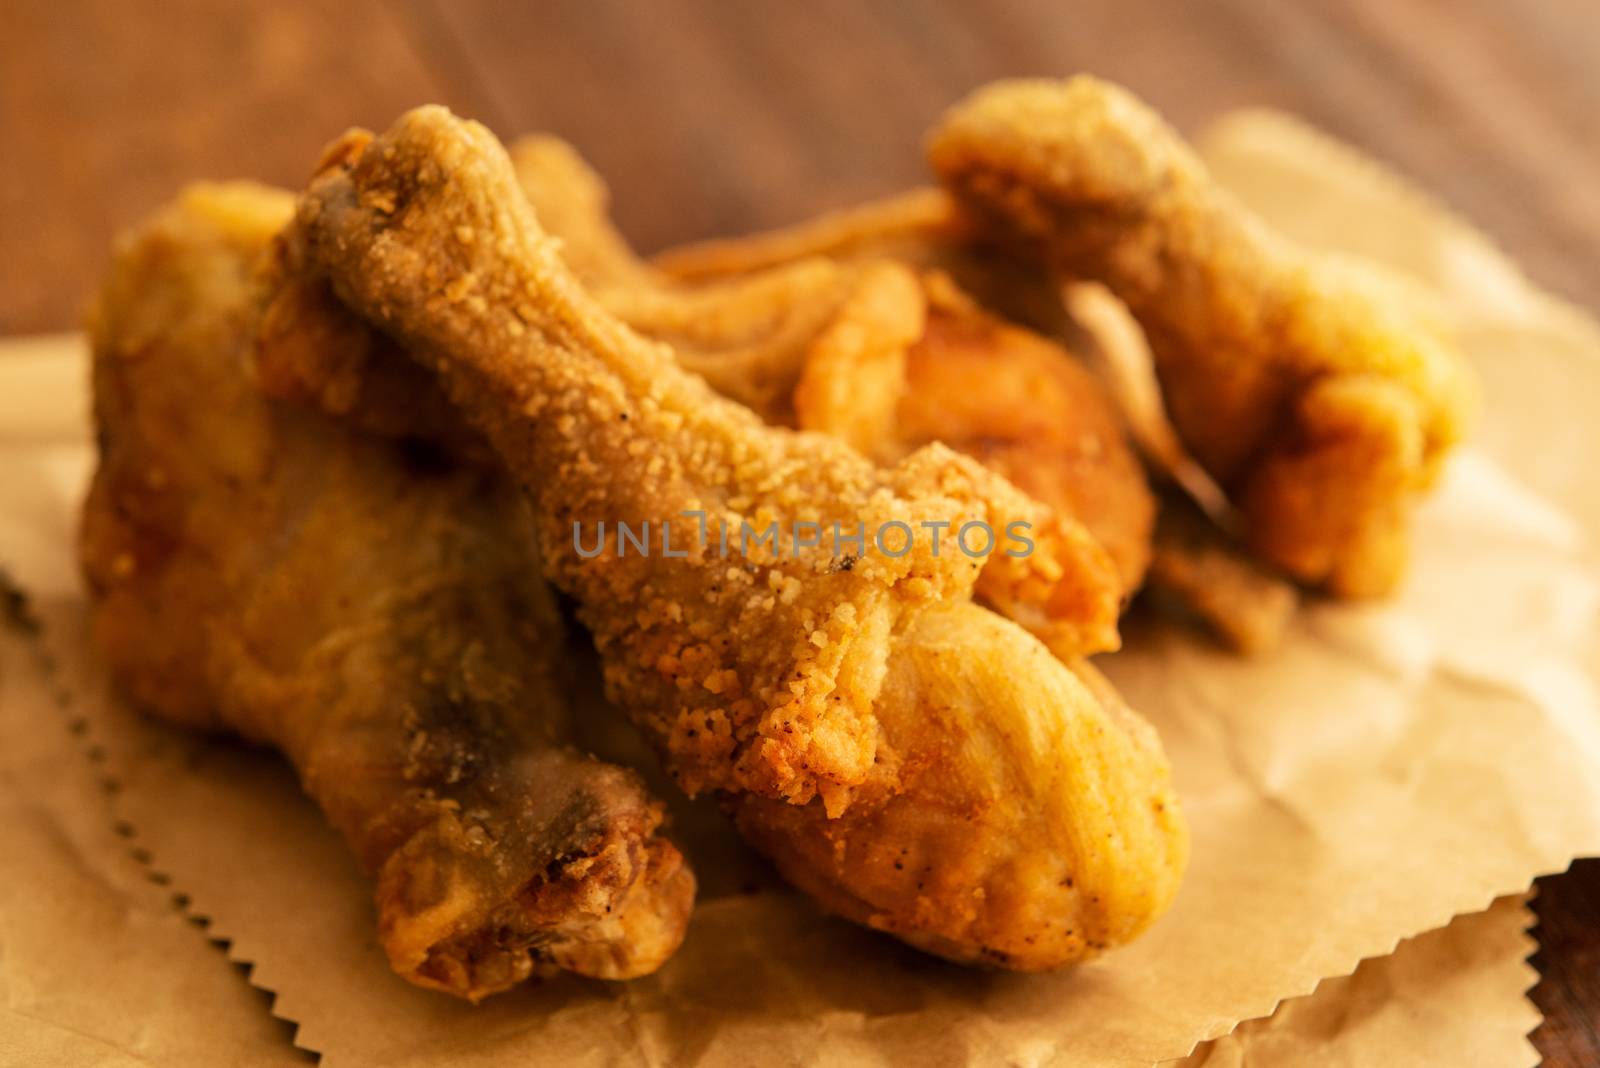 Close up original recipe fried chickens, on dark wooden background.